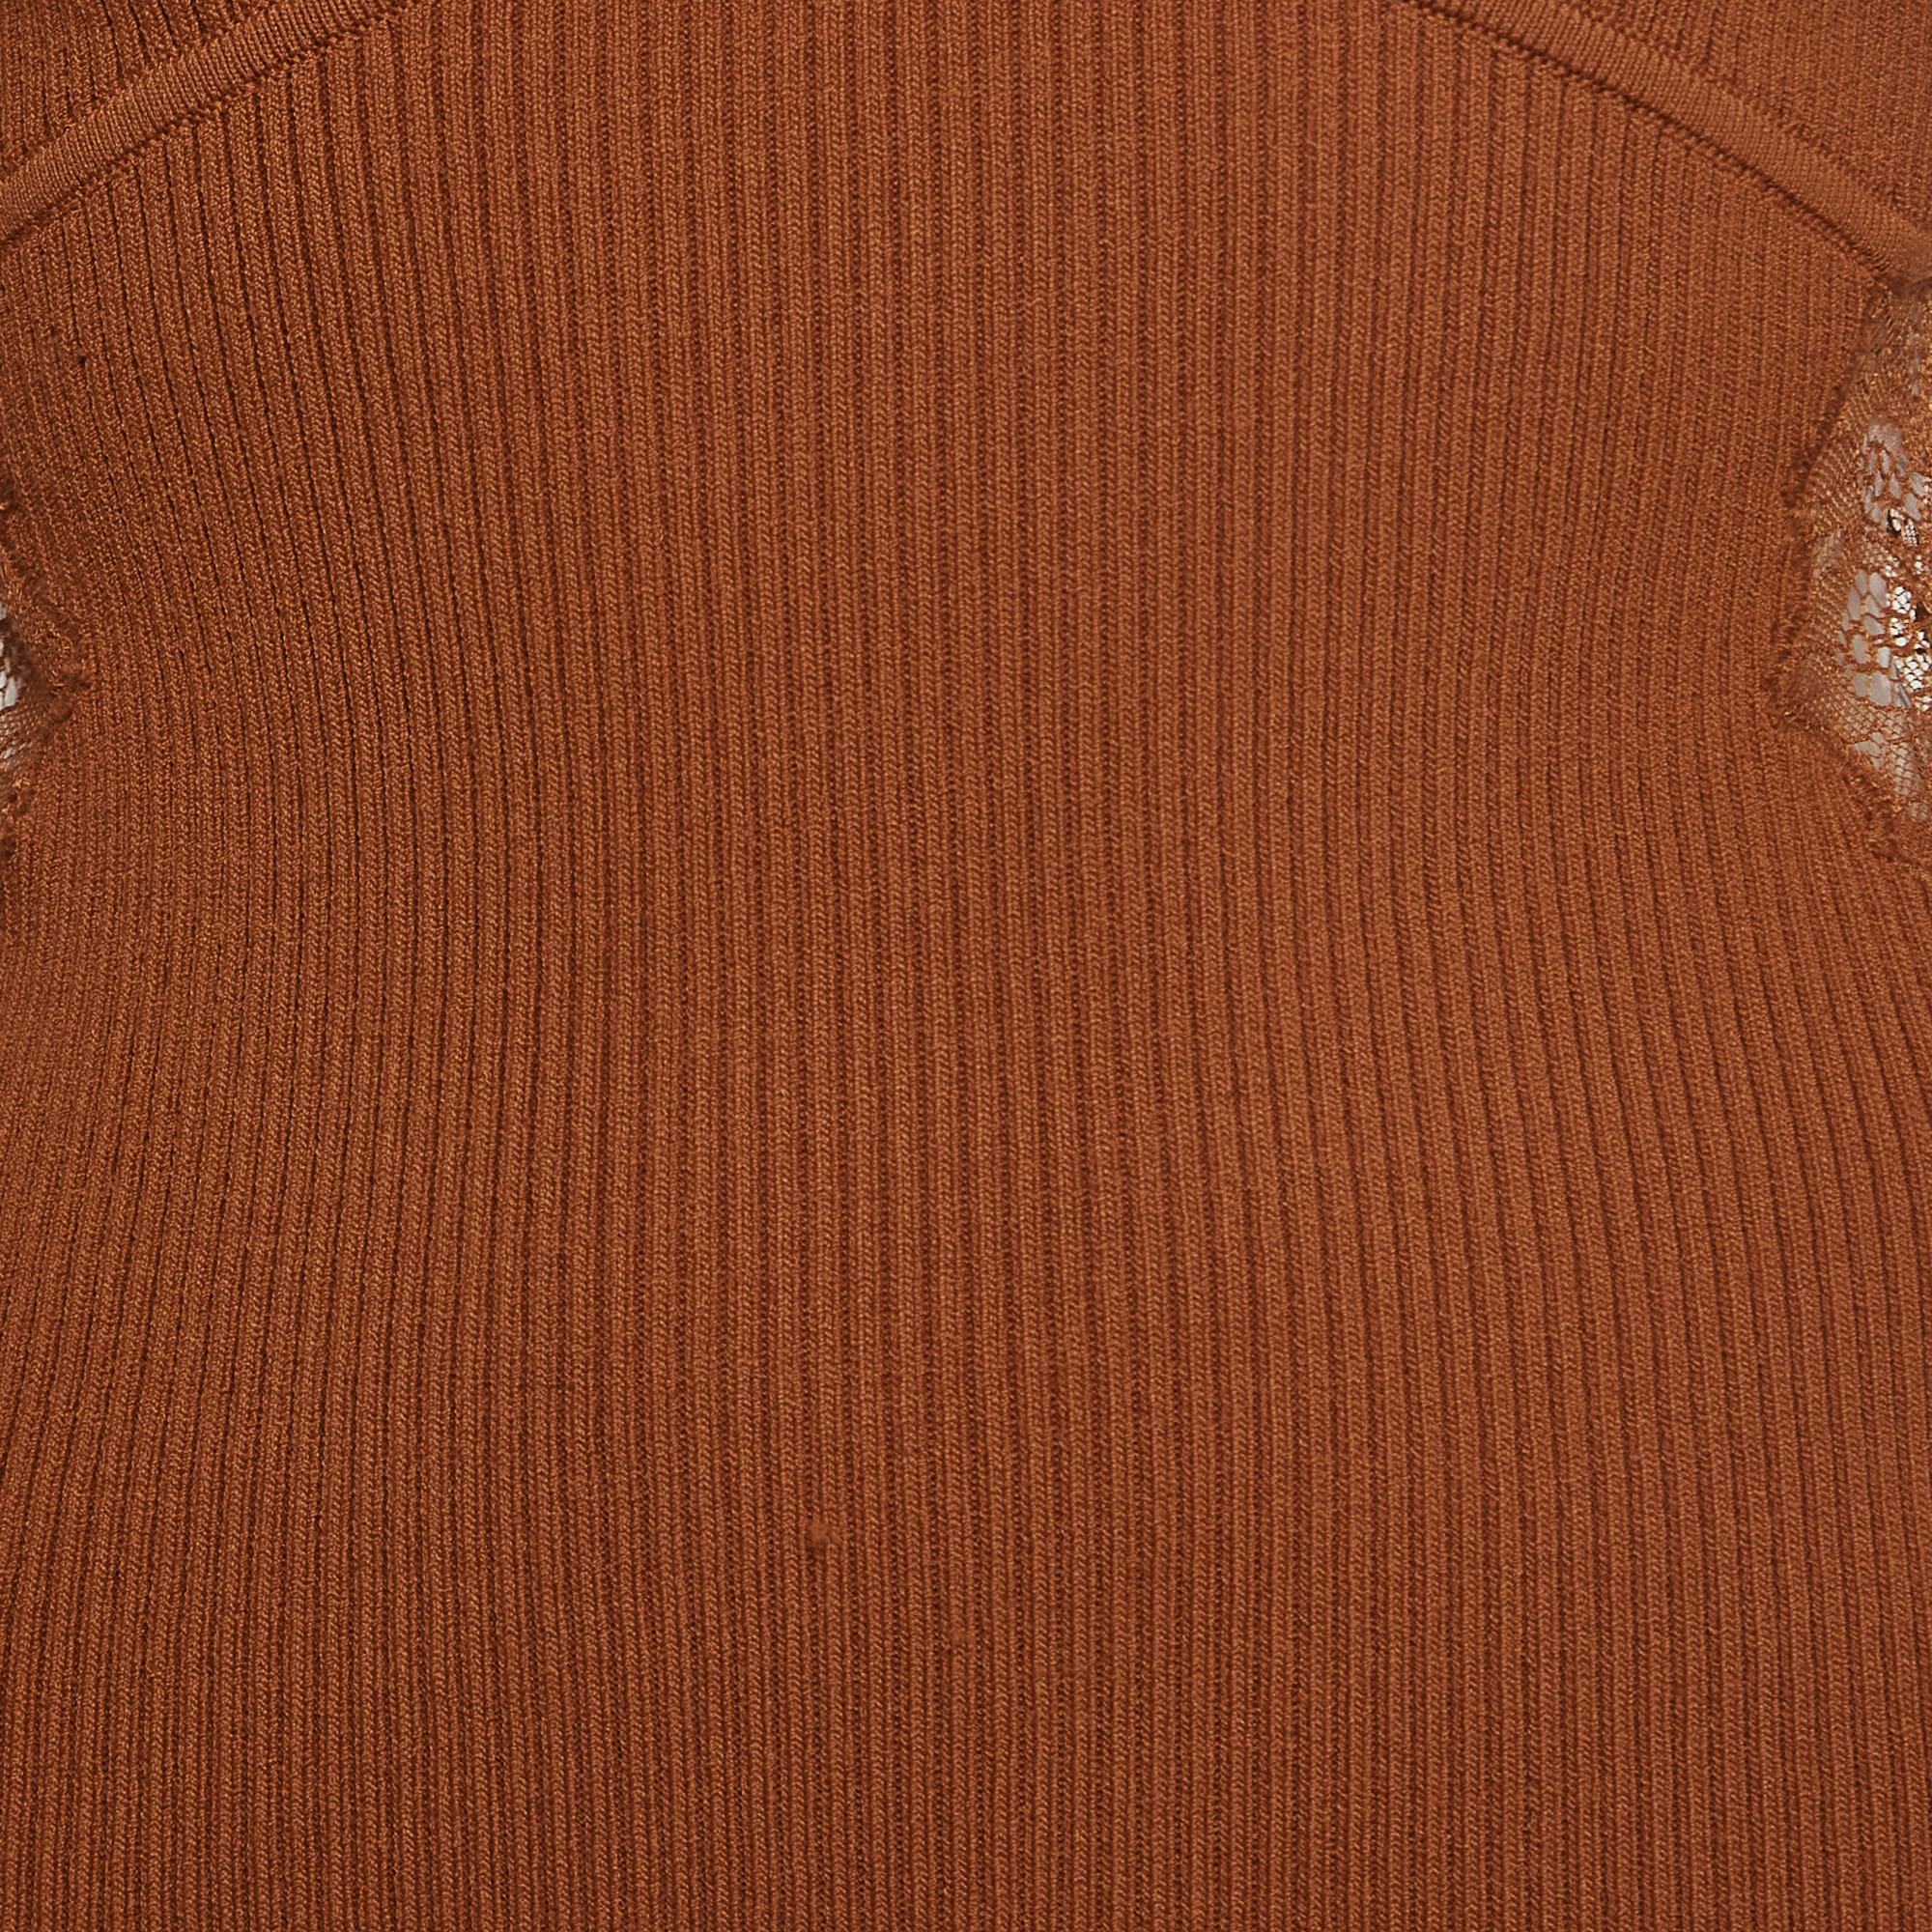 Self-Portrait Brown Rib Knit Lace Detail Long Sleeve Top M